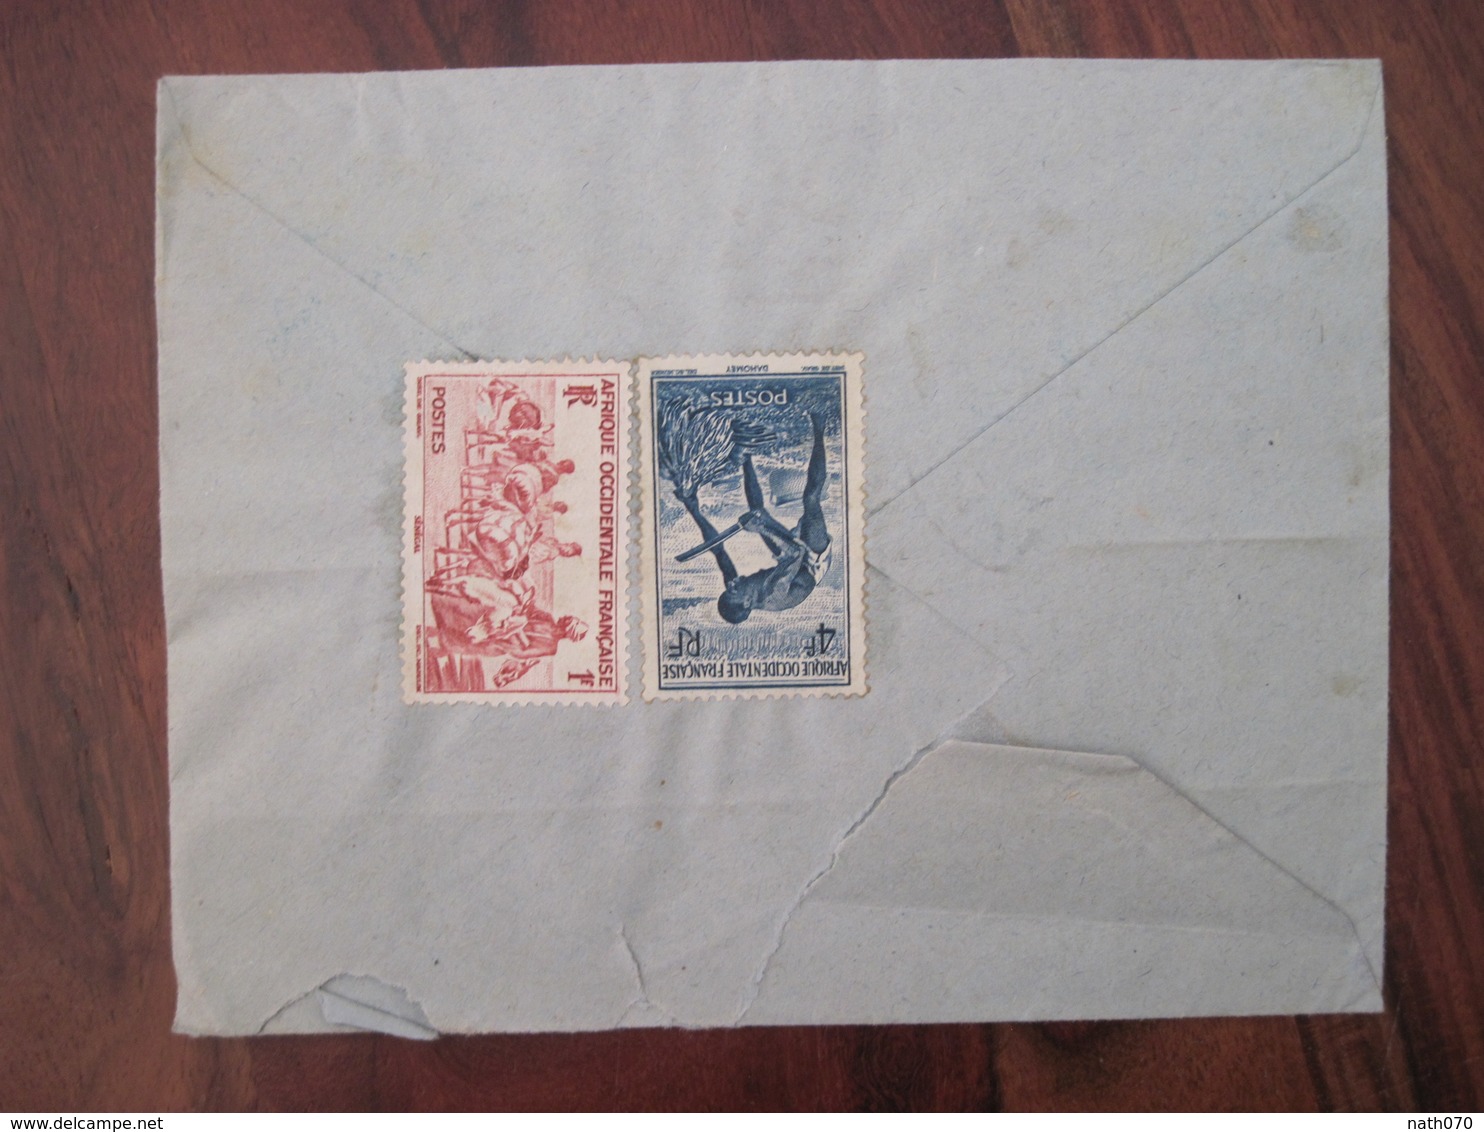 Cote D'Ivoire 1952 France TABOU AOF Timbre Lettre Enveloppe Cover Colonie Elfenbeinküste Ivoiry Coast - Lettres & Documents